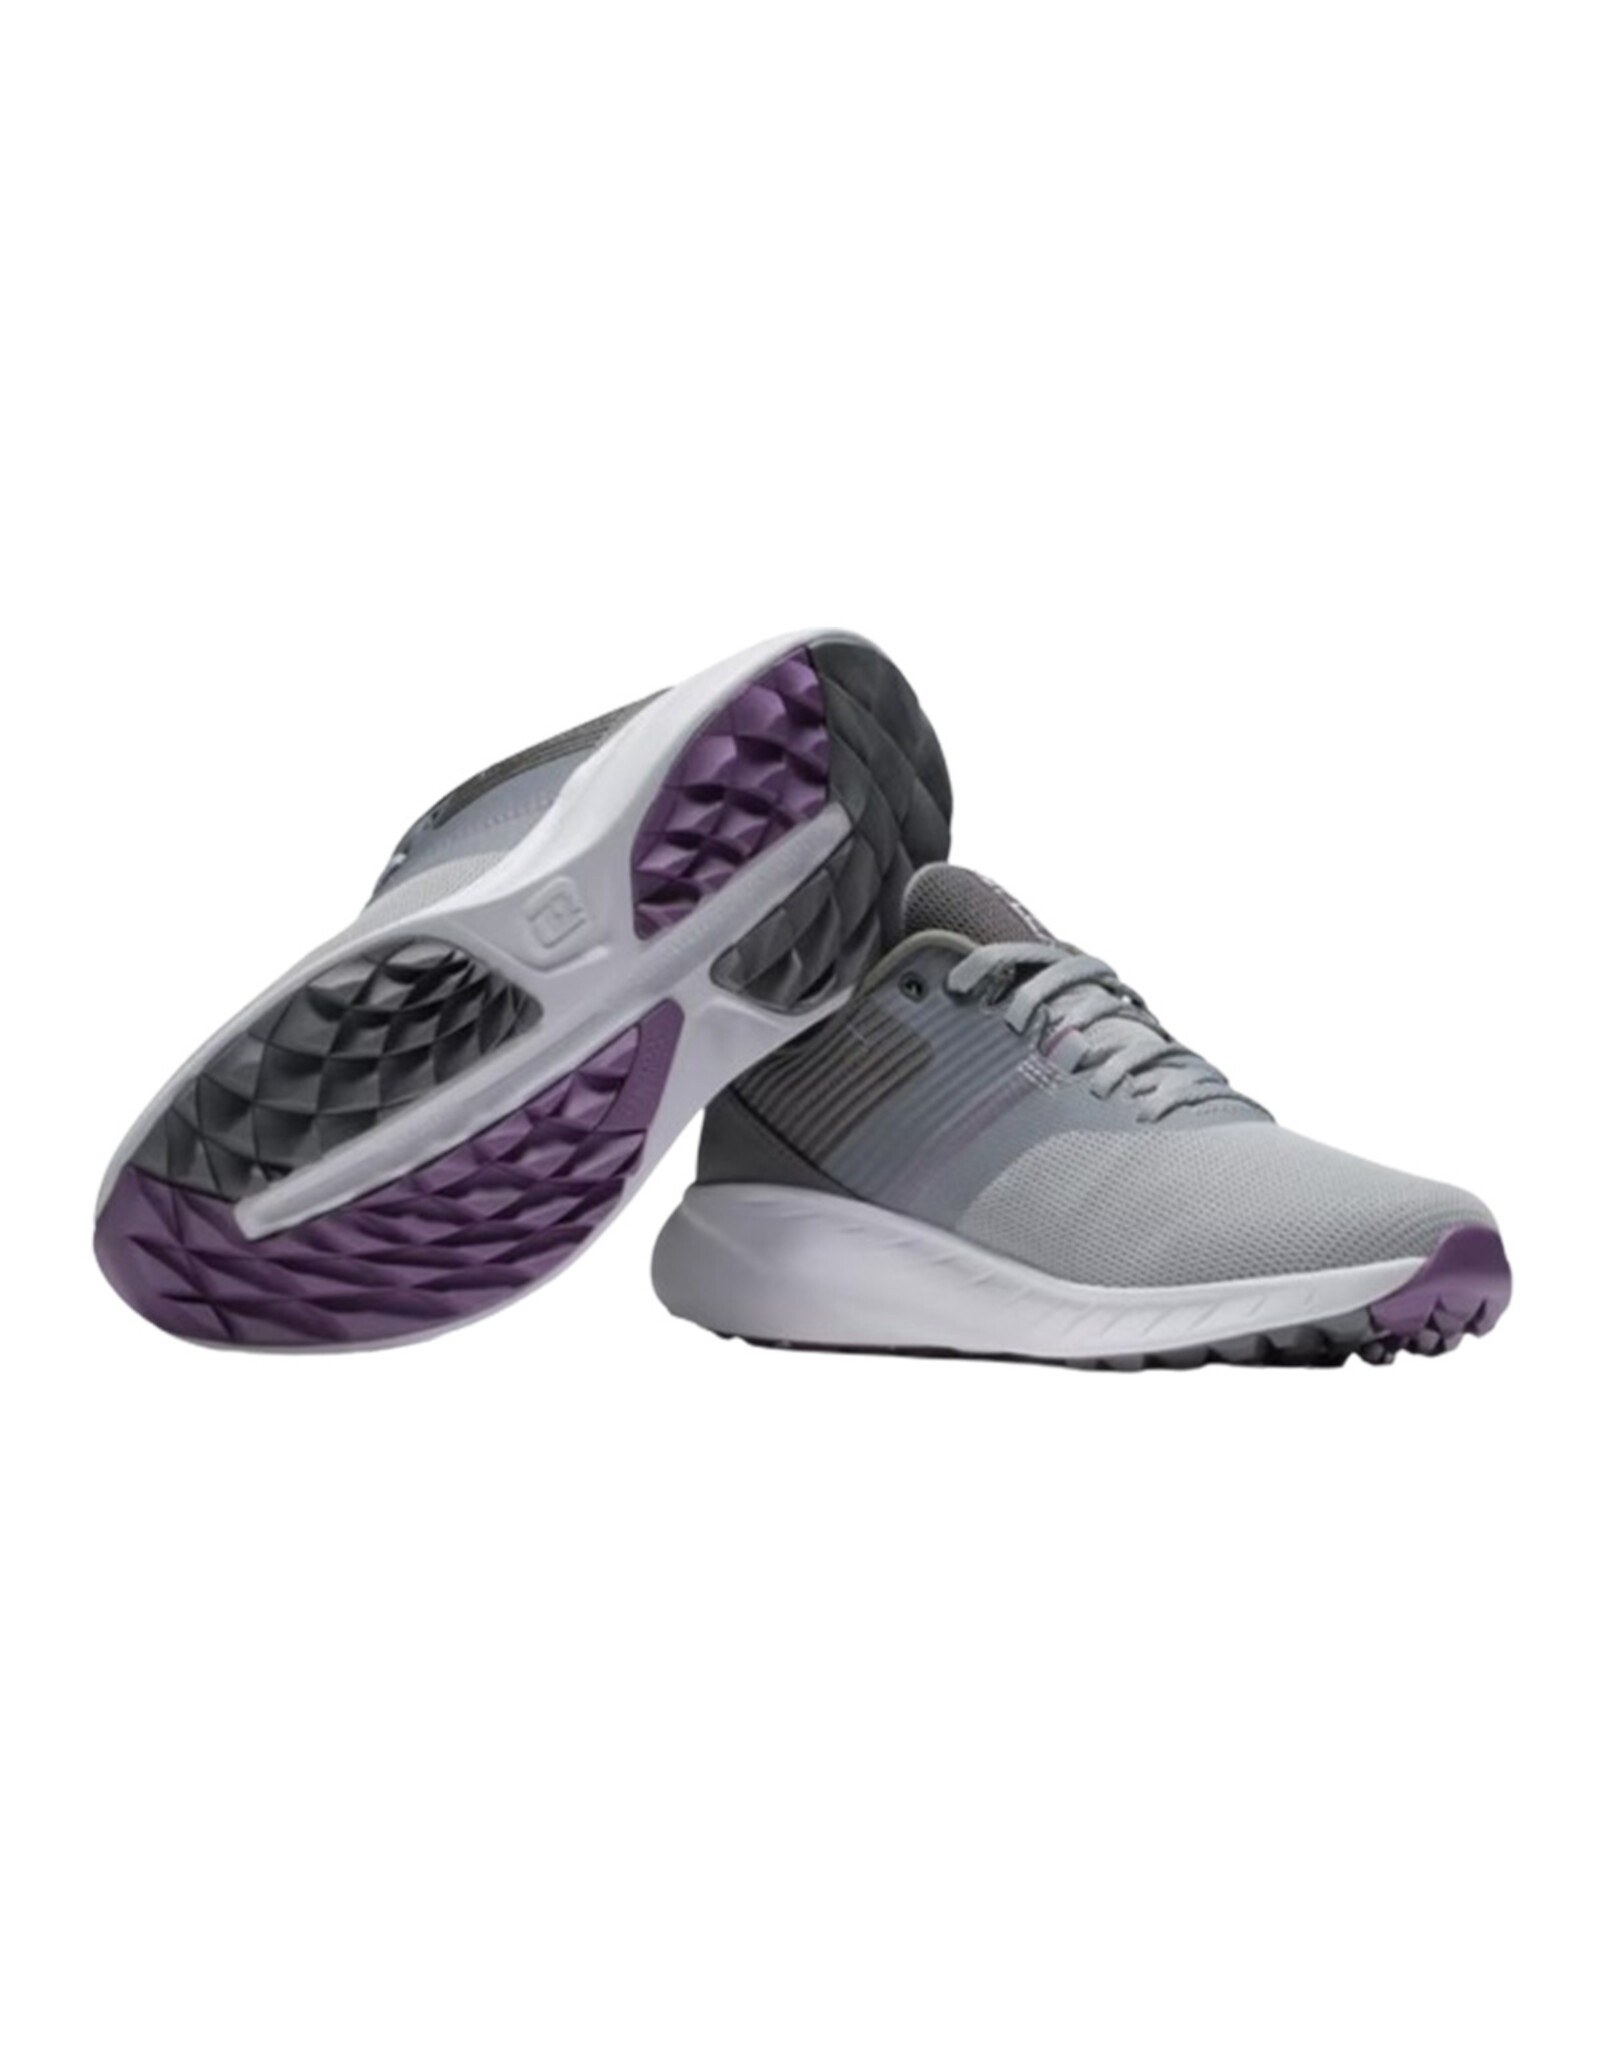 FootJoy FootJoy Women's Flex Grey/Charcoal Golf Shoes